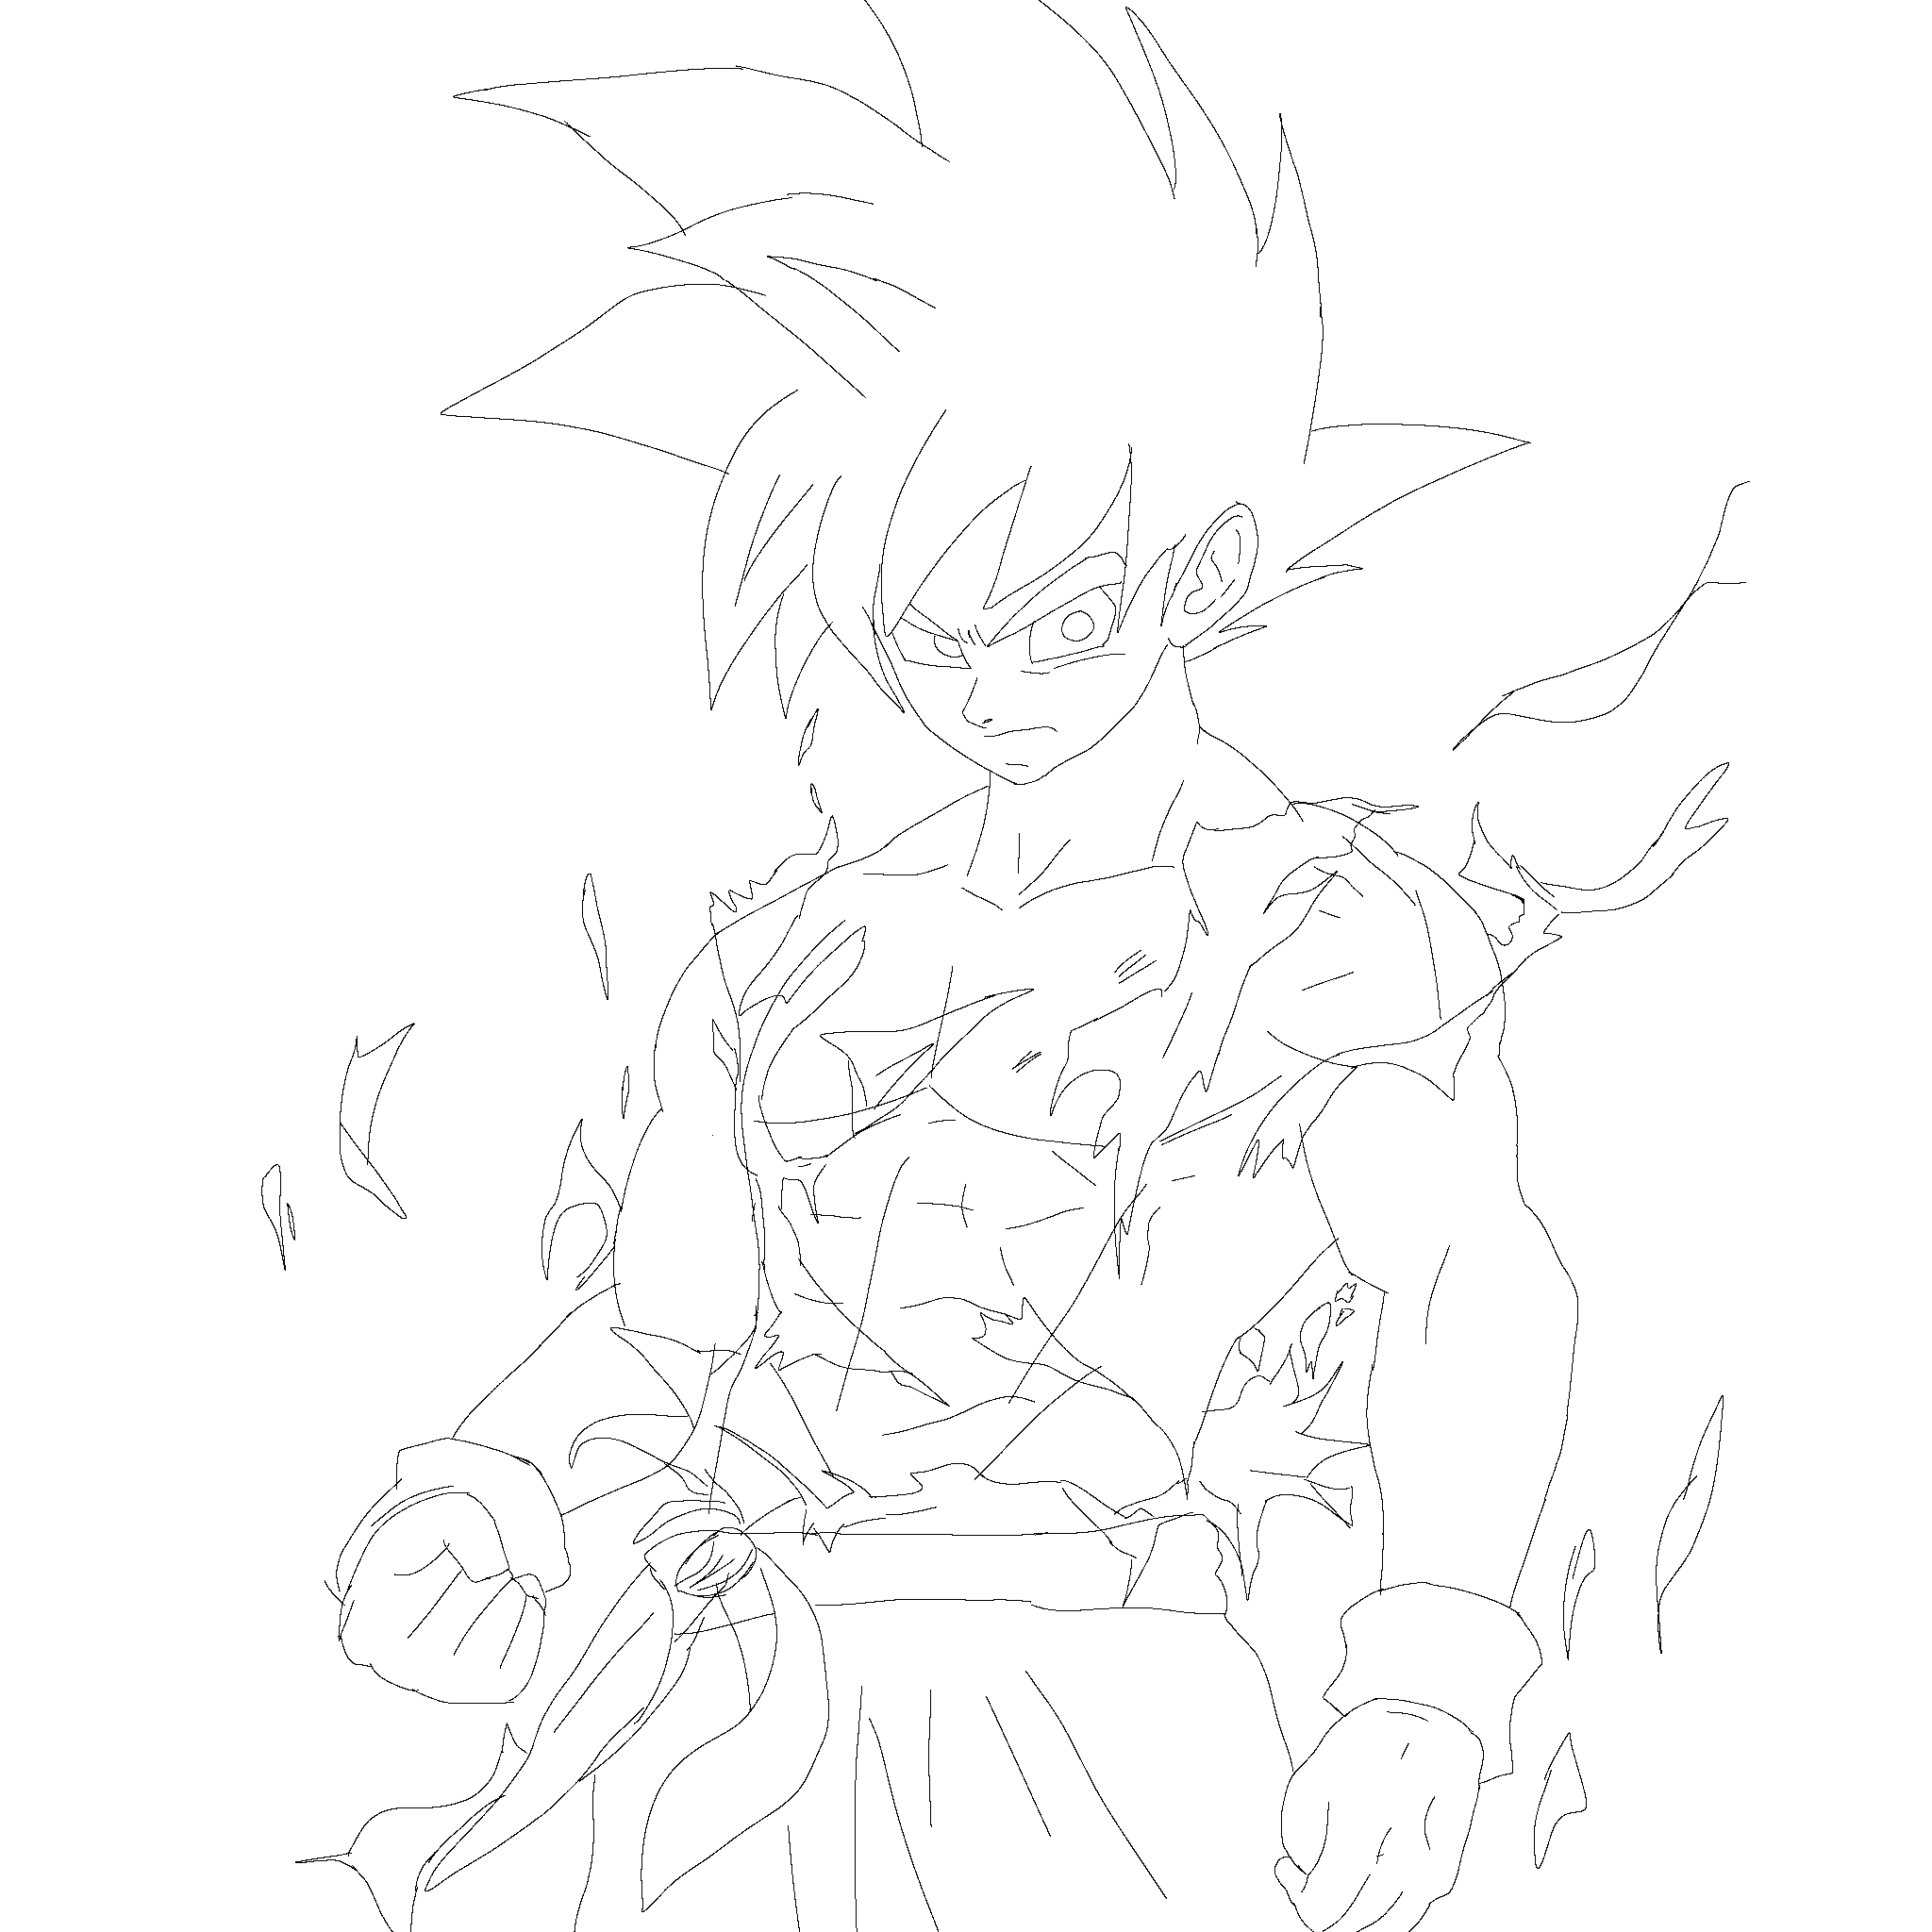 Sketch of Goku